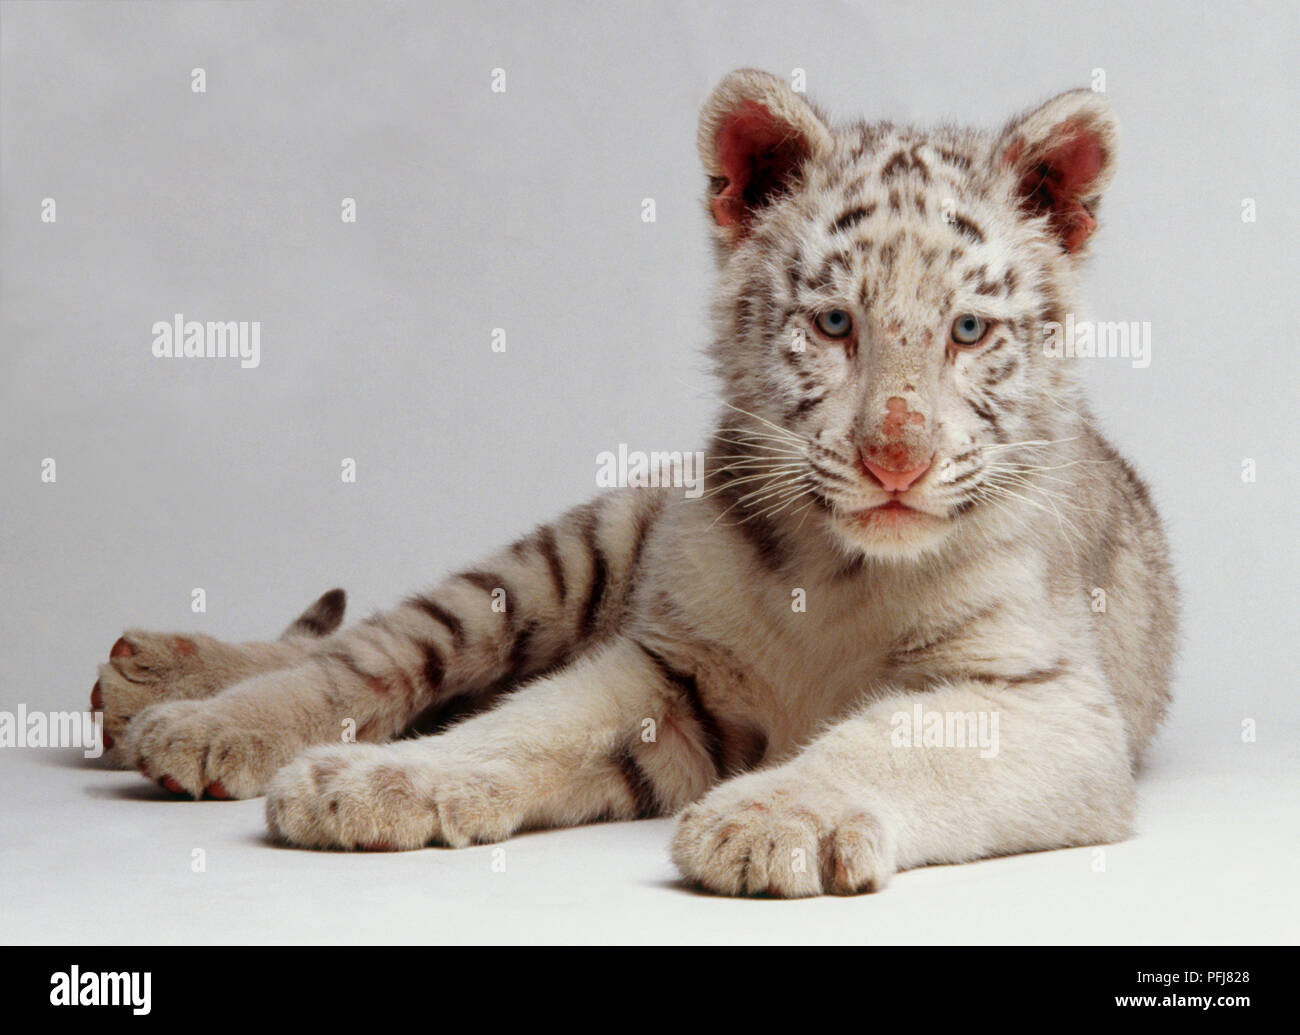 White tiger cub (Panthera tigris) lying down, white fur and dark stripes, front view Stock Photo